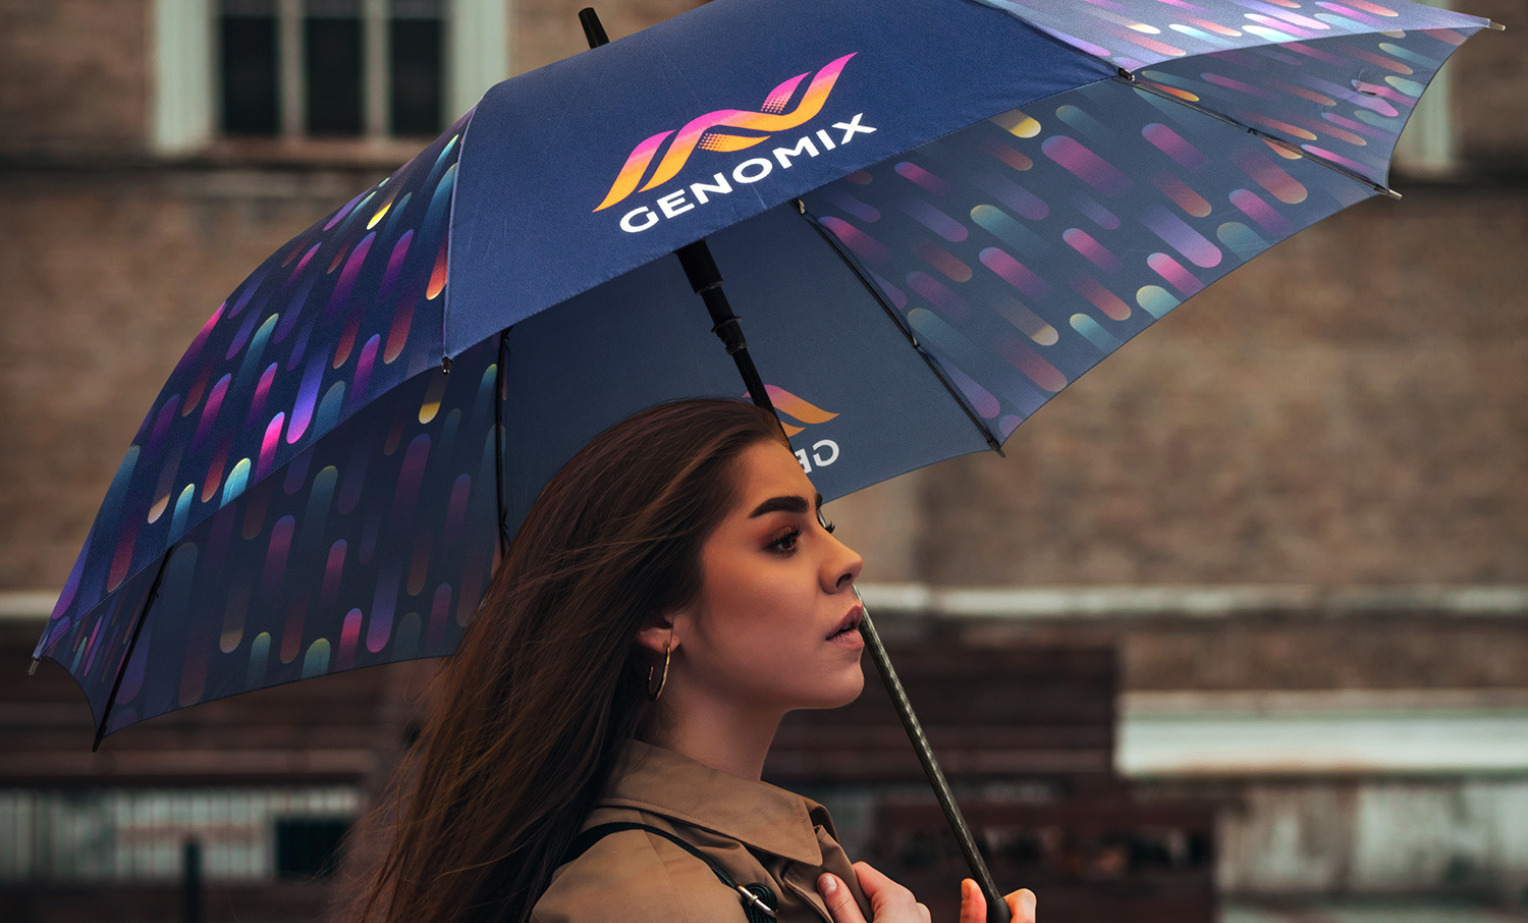 Branding Beyond the Clouds: Unique Branded Umbrellas in Australia